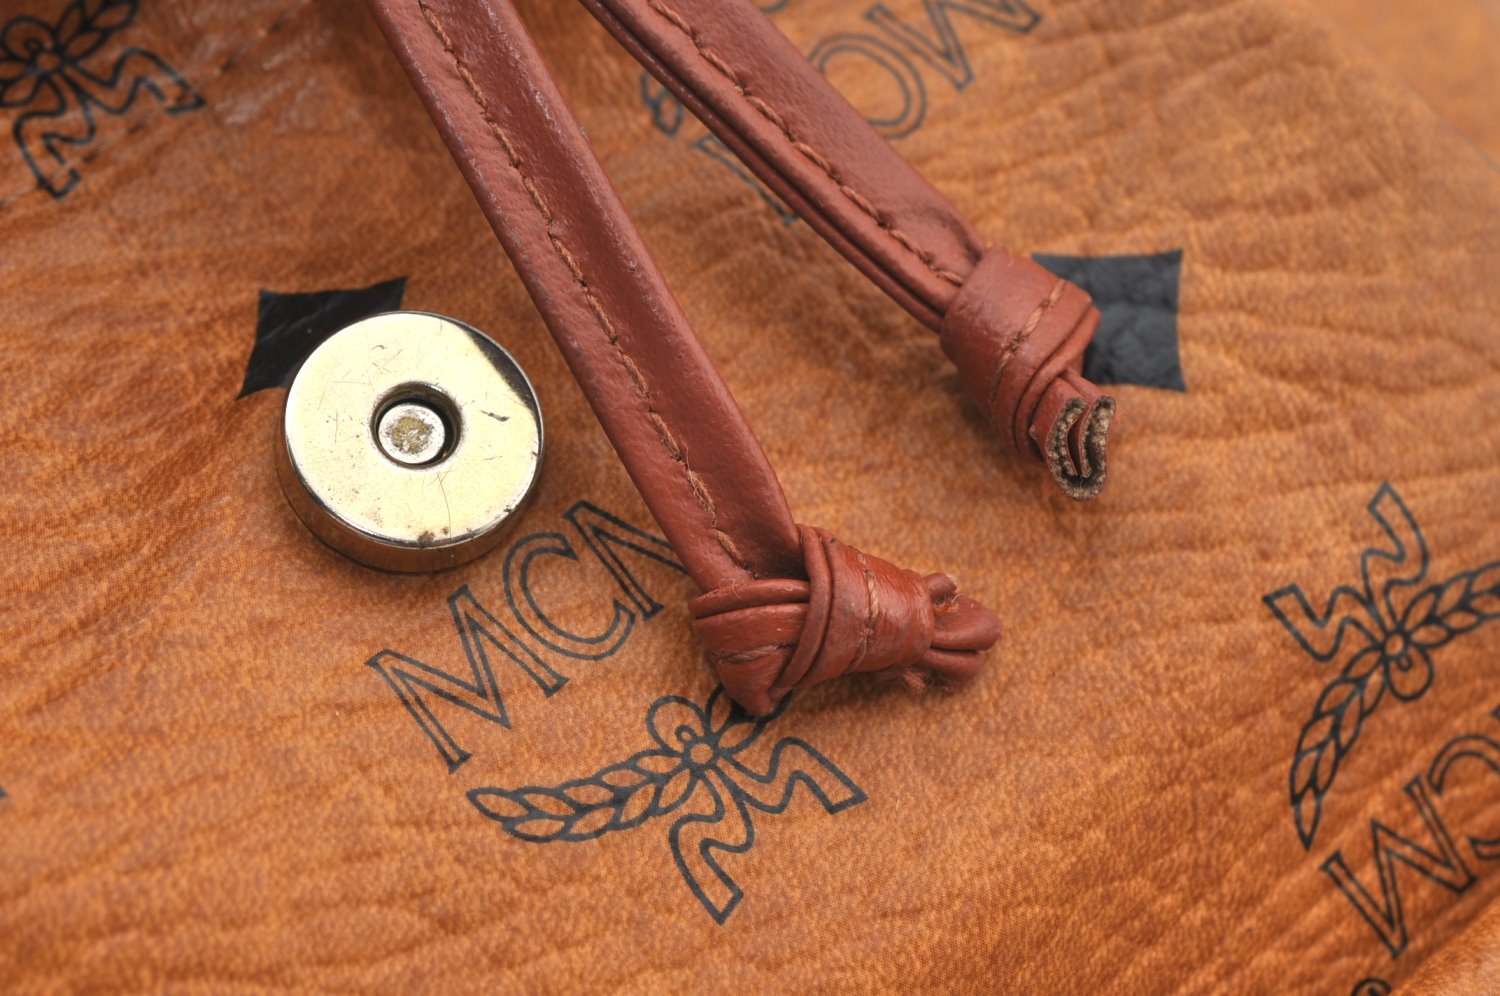 Authentic MCM Visetos Leather Vintage Drawstring Backpack Purse Brown 1673I